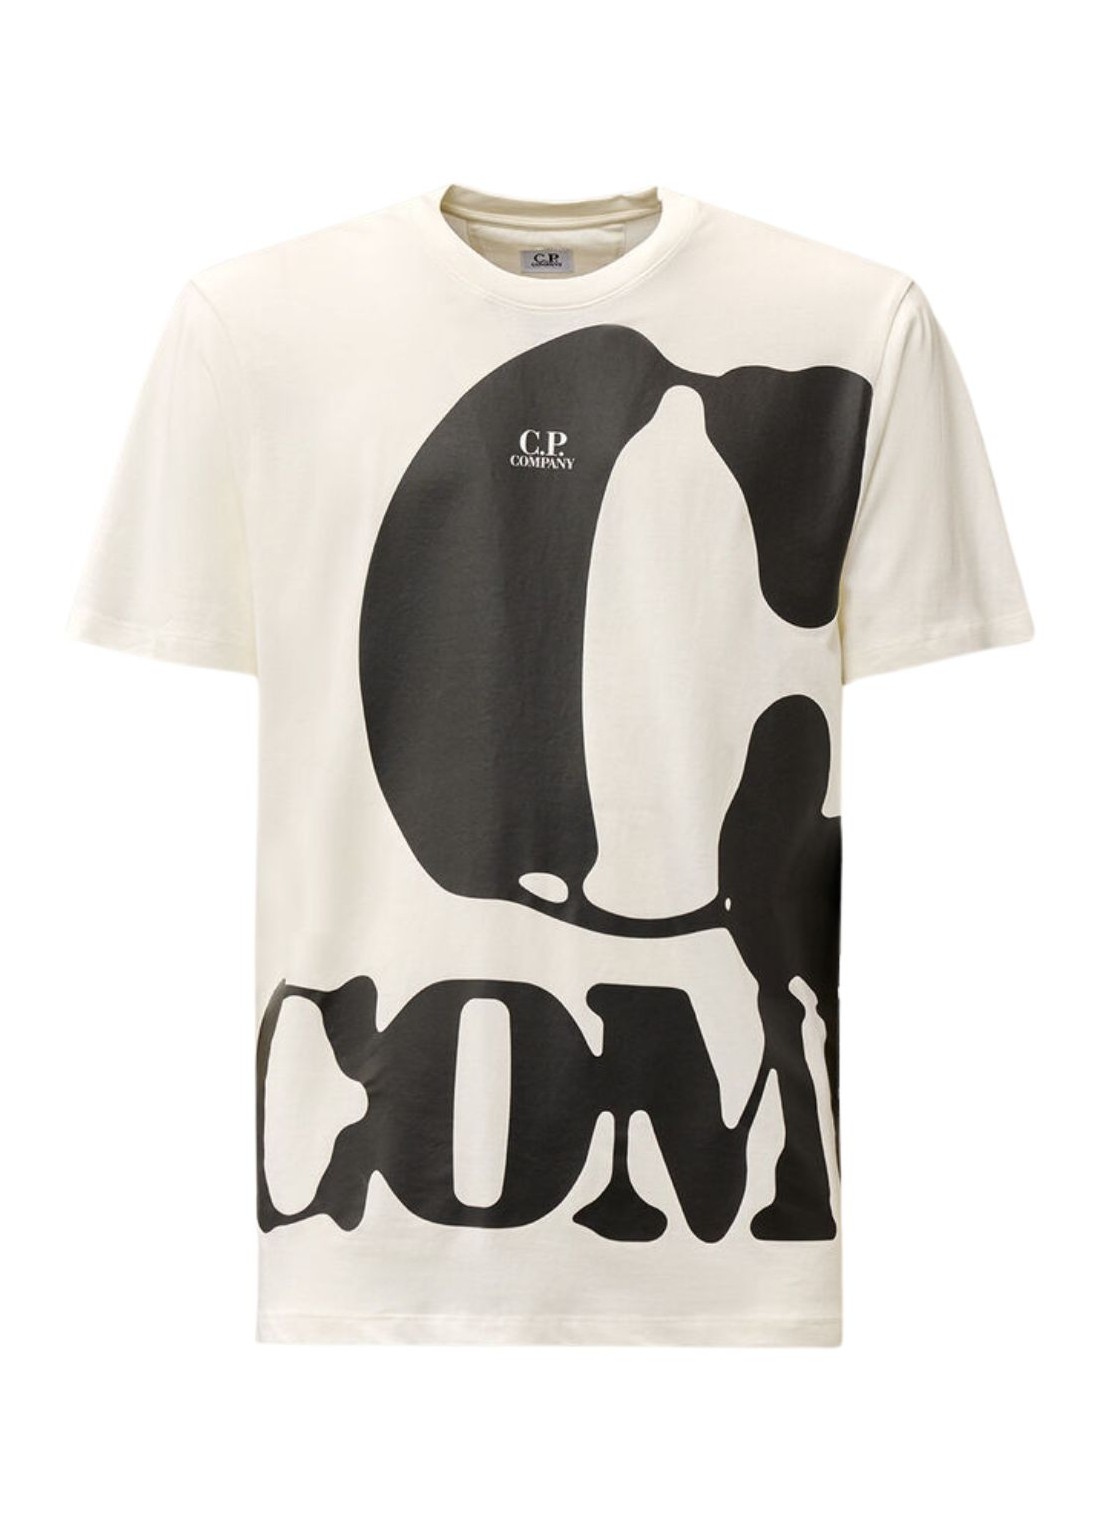 Camiseta c.p.company t-shirt man 30/1 jersey relaxed logo t-shirt 16cmts144a006586w 103 talla XL
 